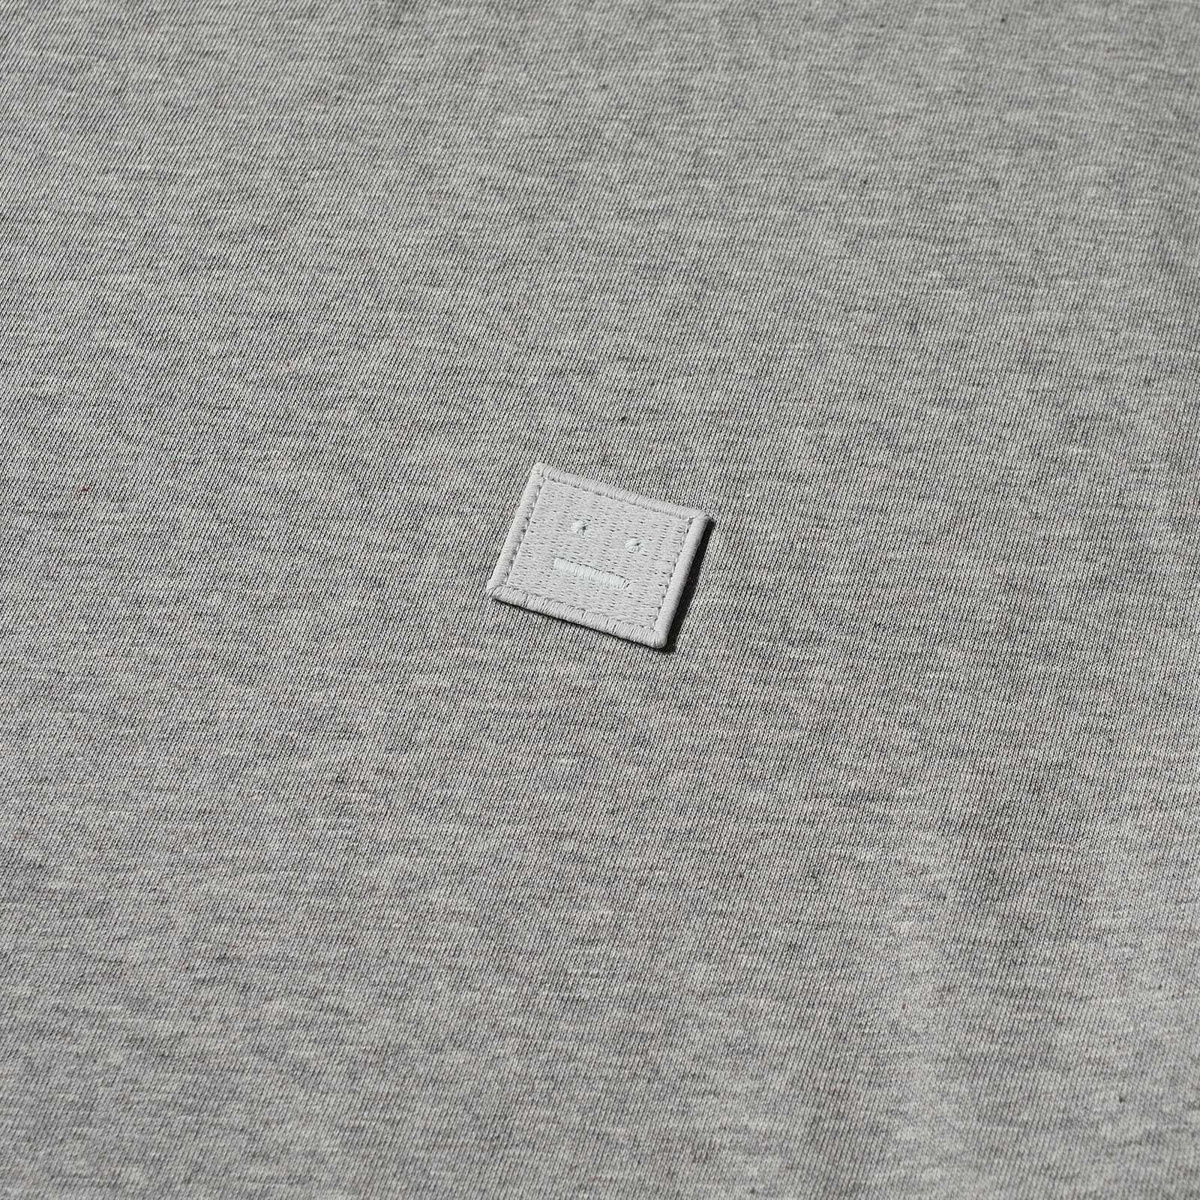 Acne Studios Exford Face T-Shirt in Light Grey Melange Acne Studios